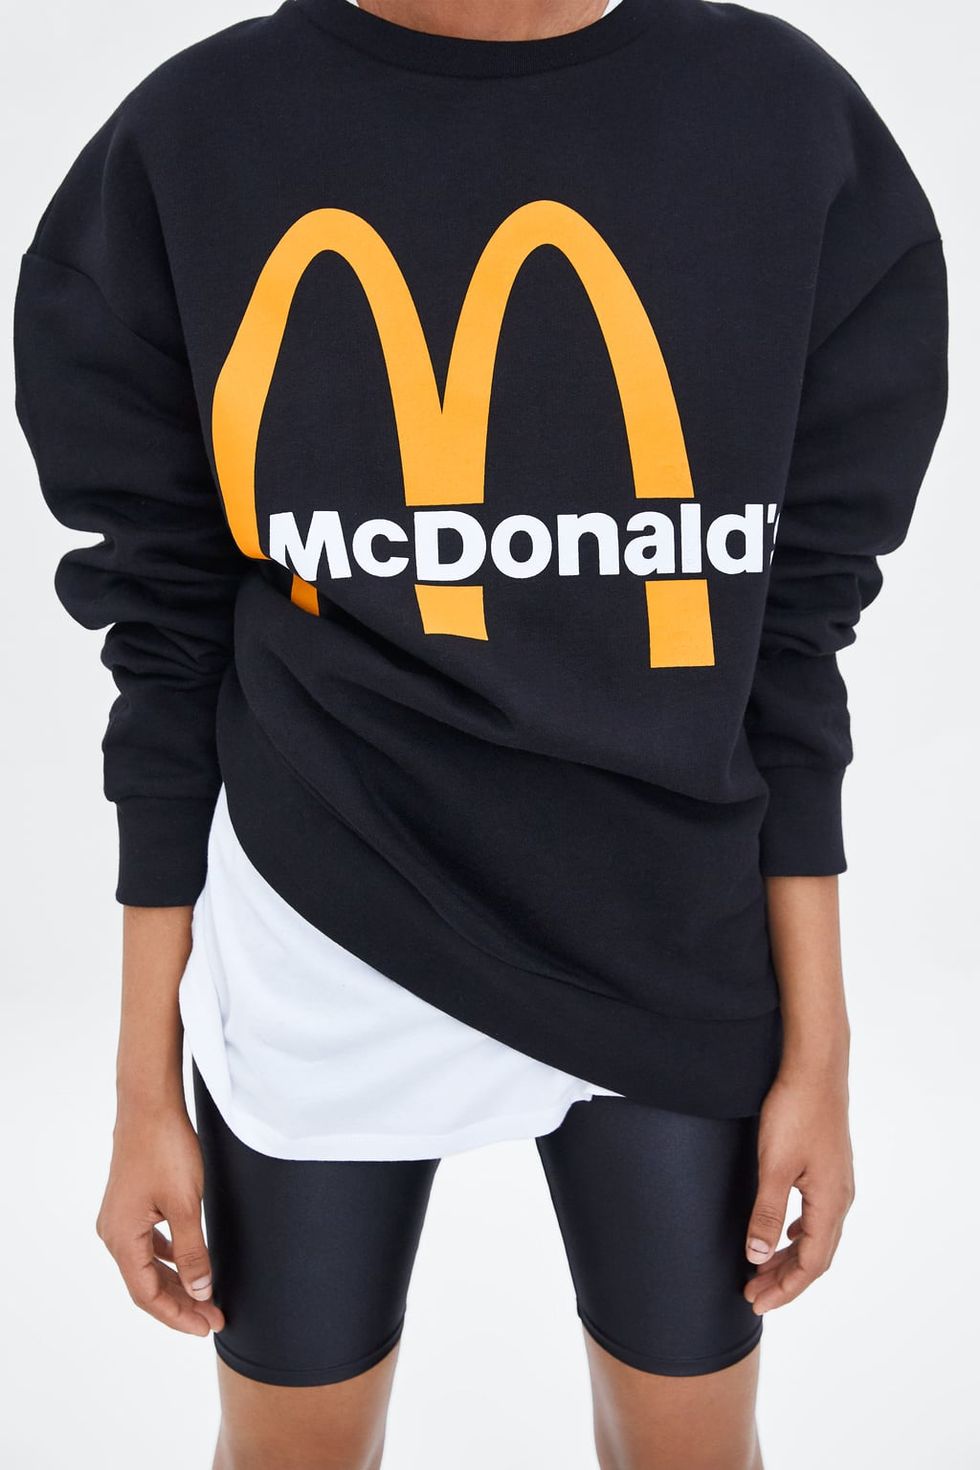 Zara McDonalds